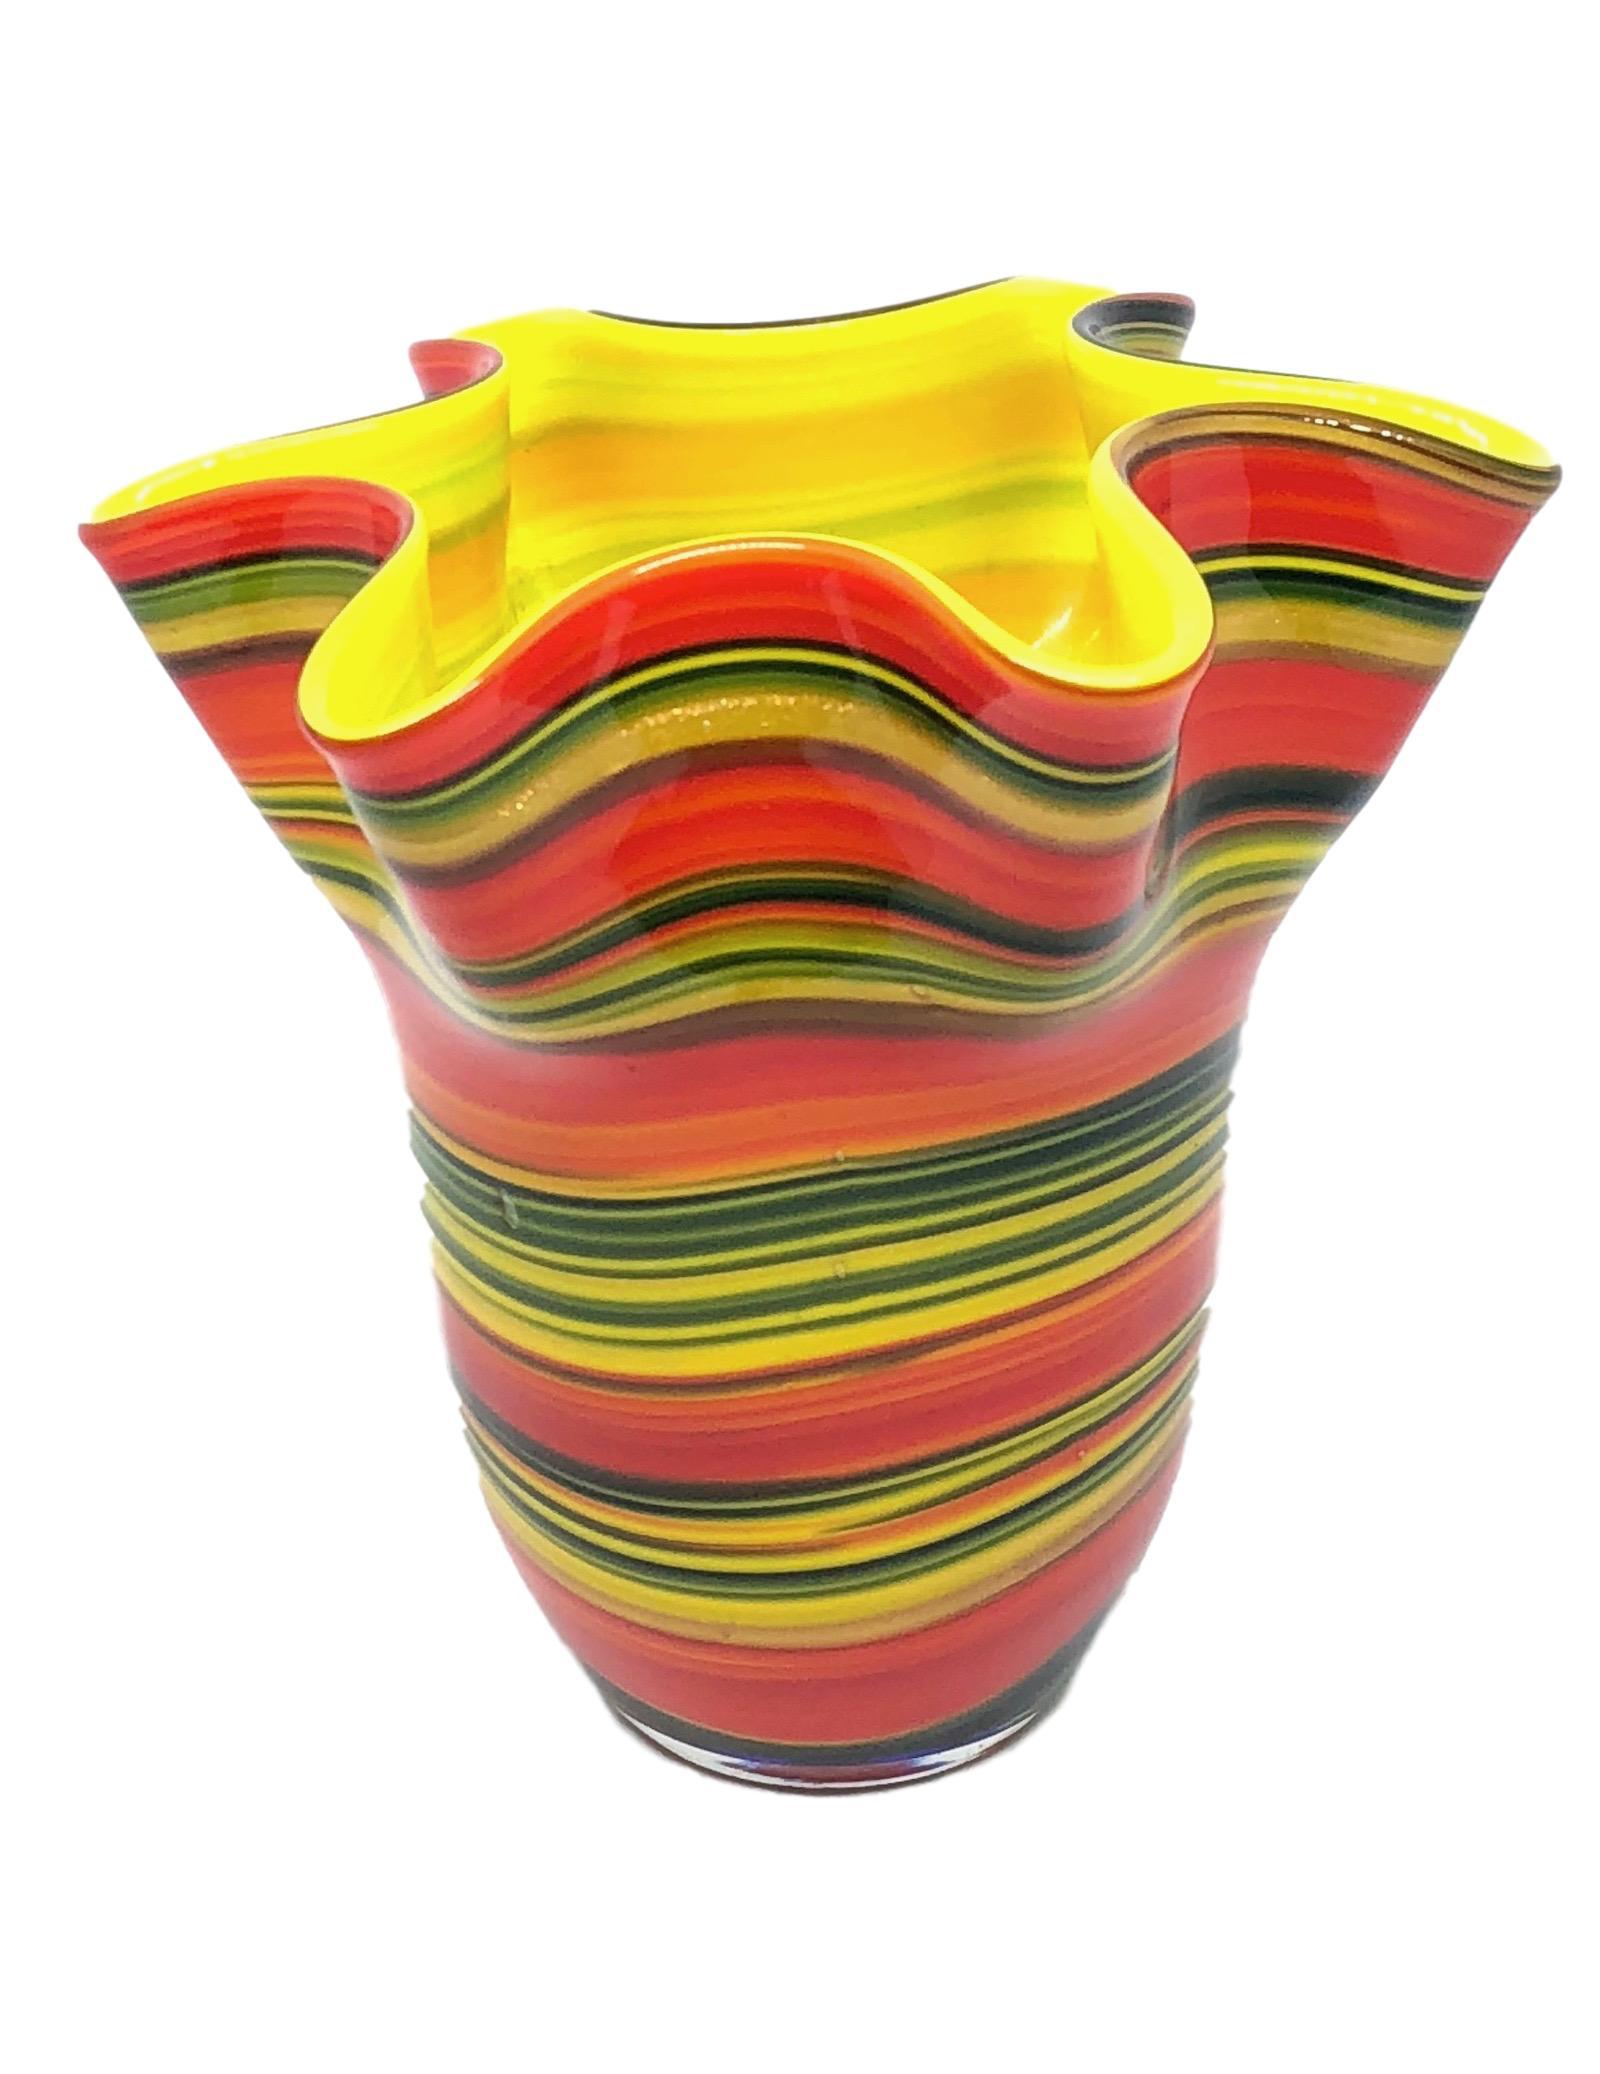 Hand-Crafted Multicolored Swirl Glass Murano Venetian Glass Vase by Fazzoletto For Sale